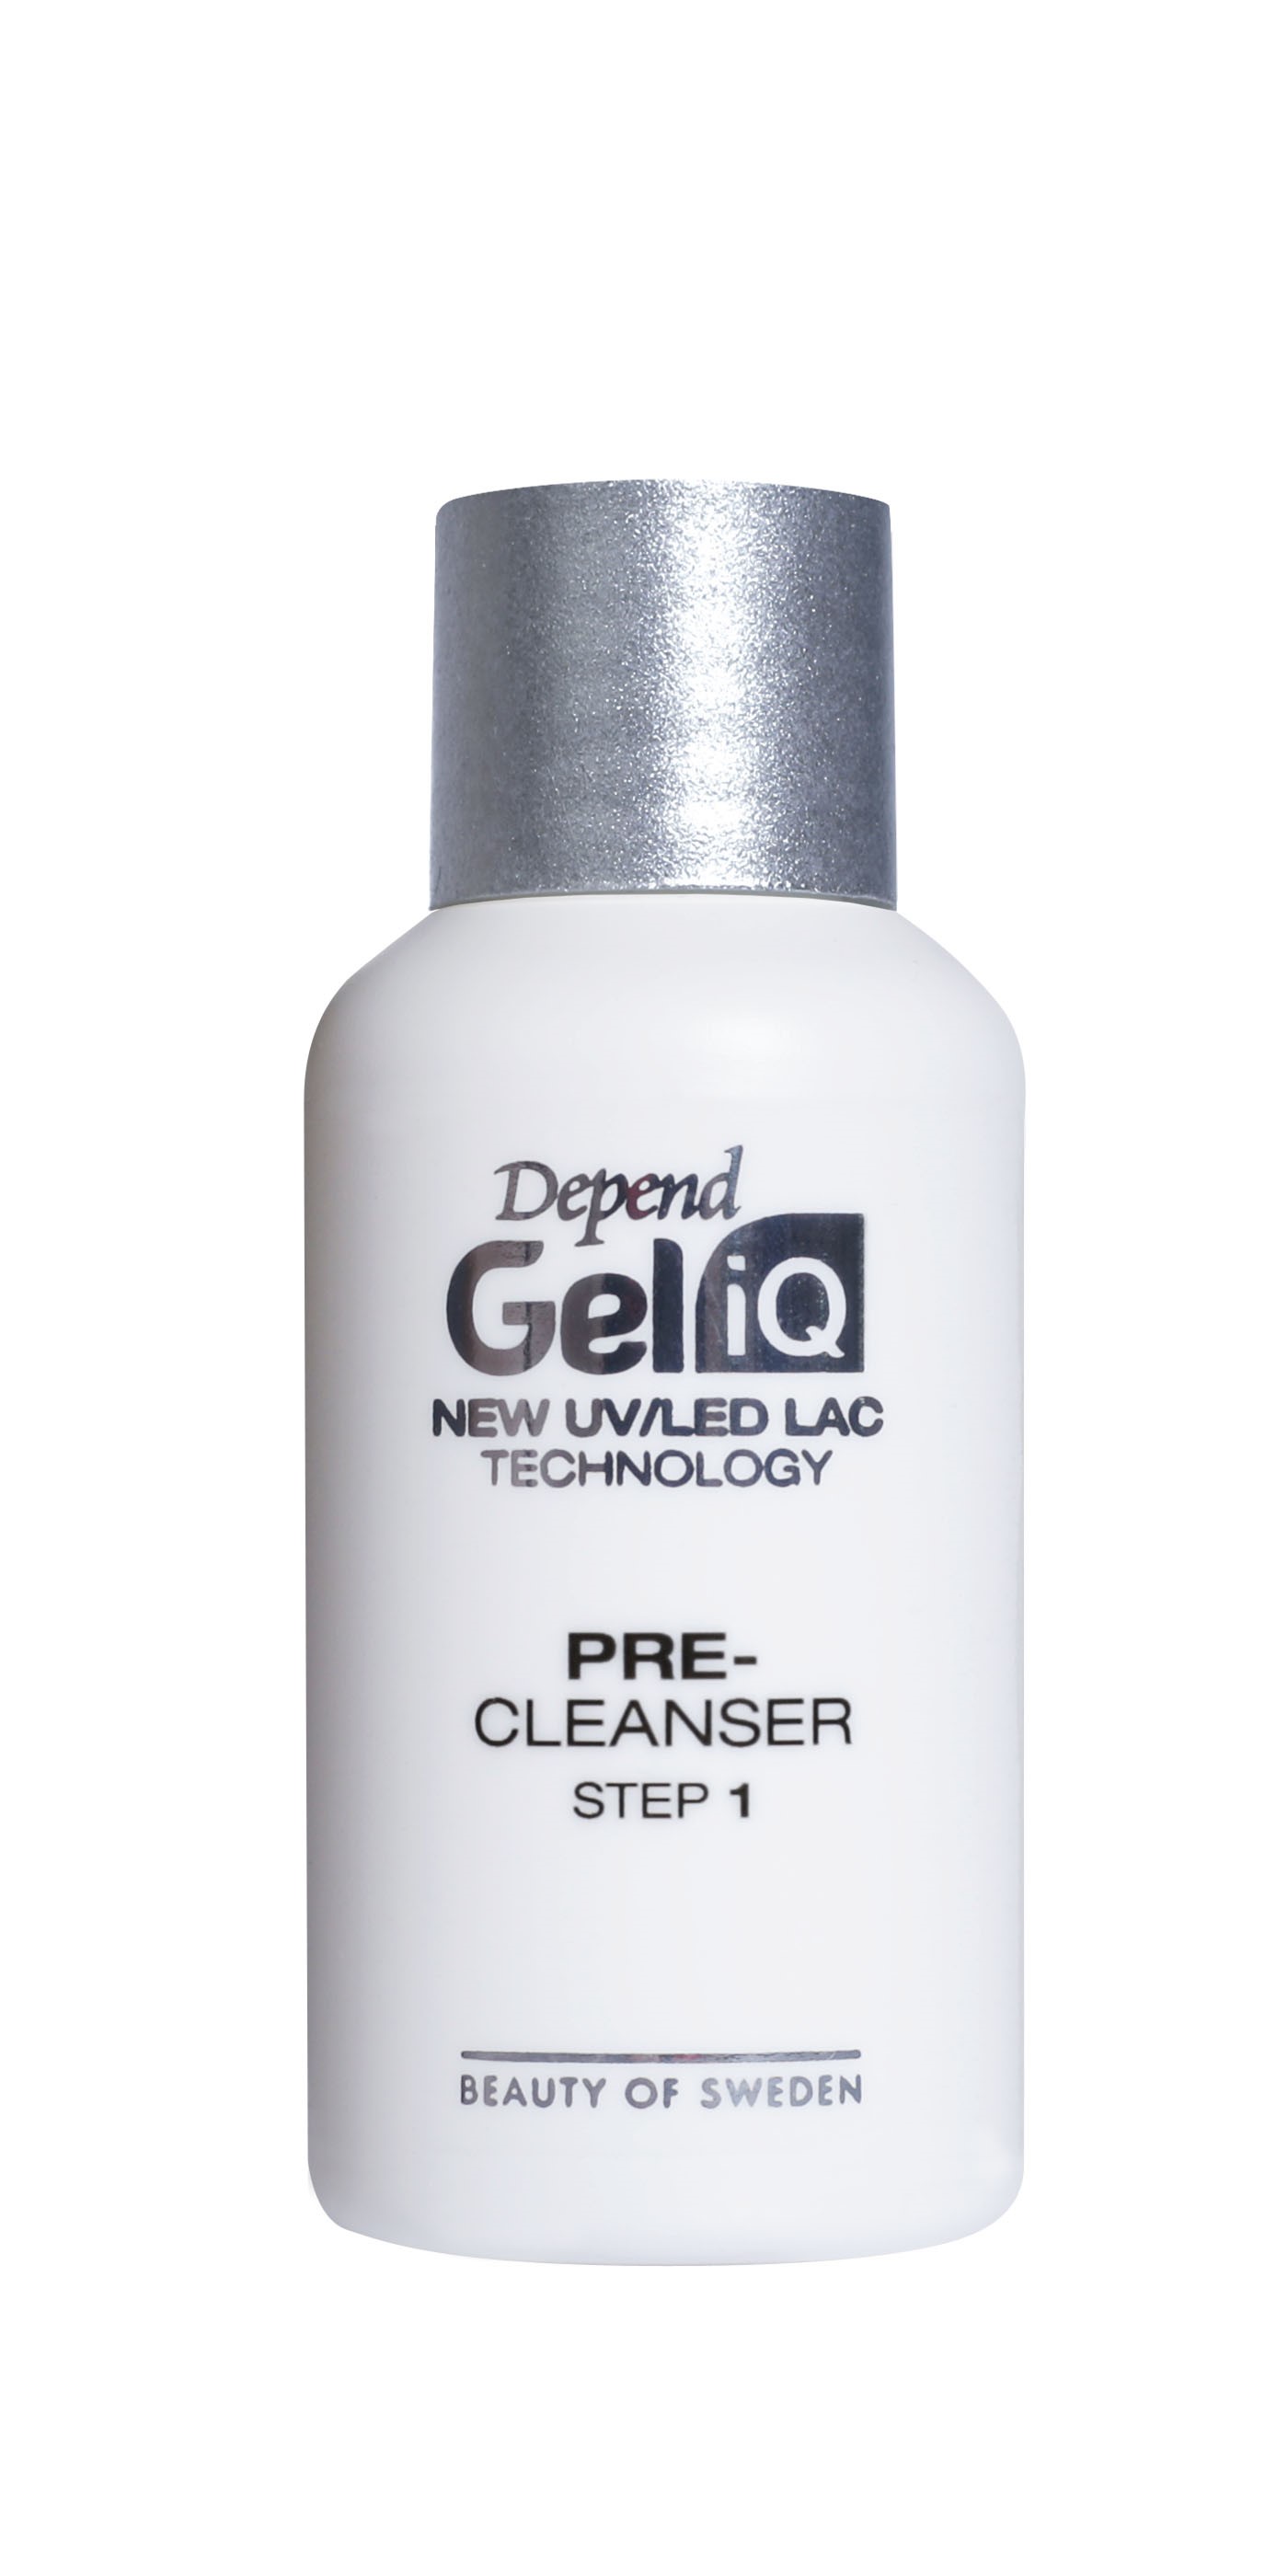 Gel iQ Pre-Cleanser Step 1